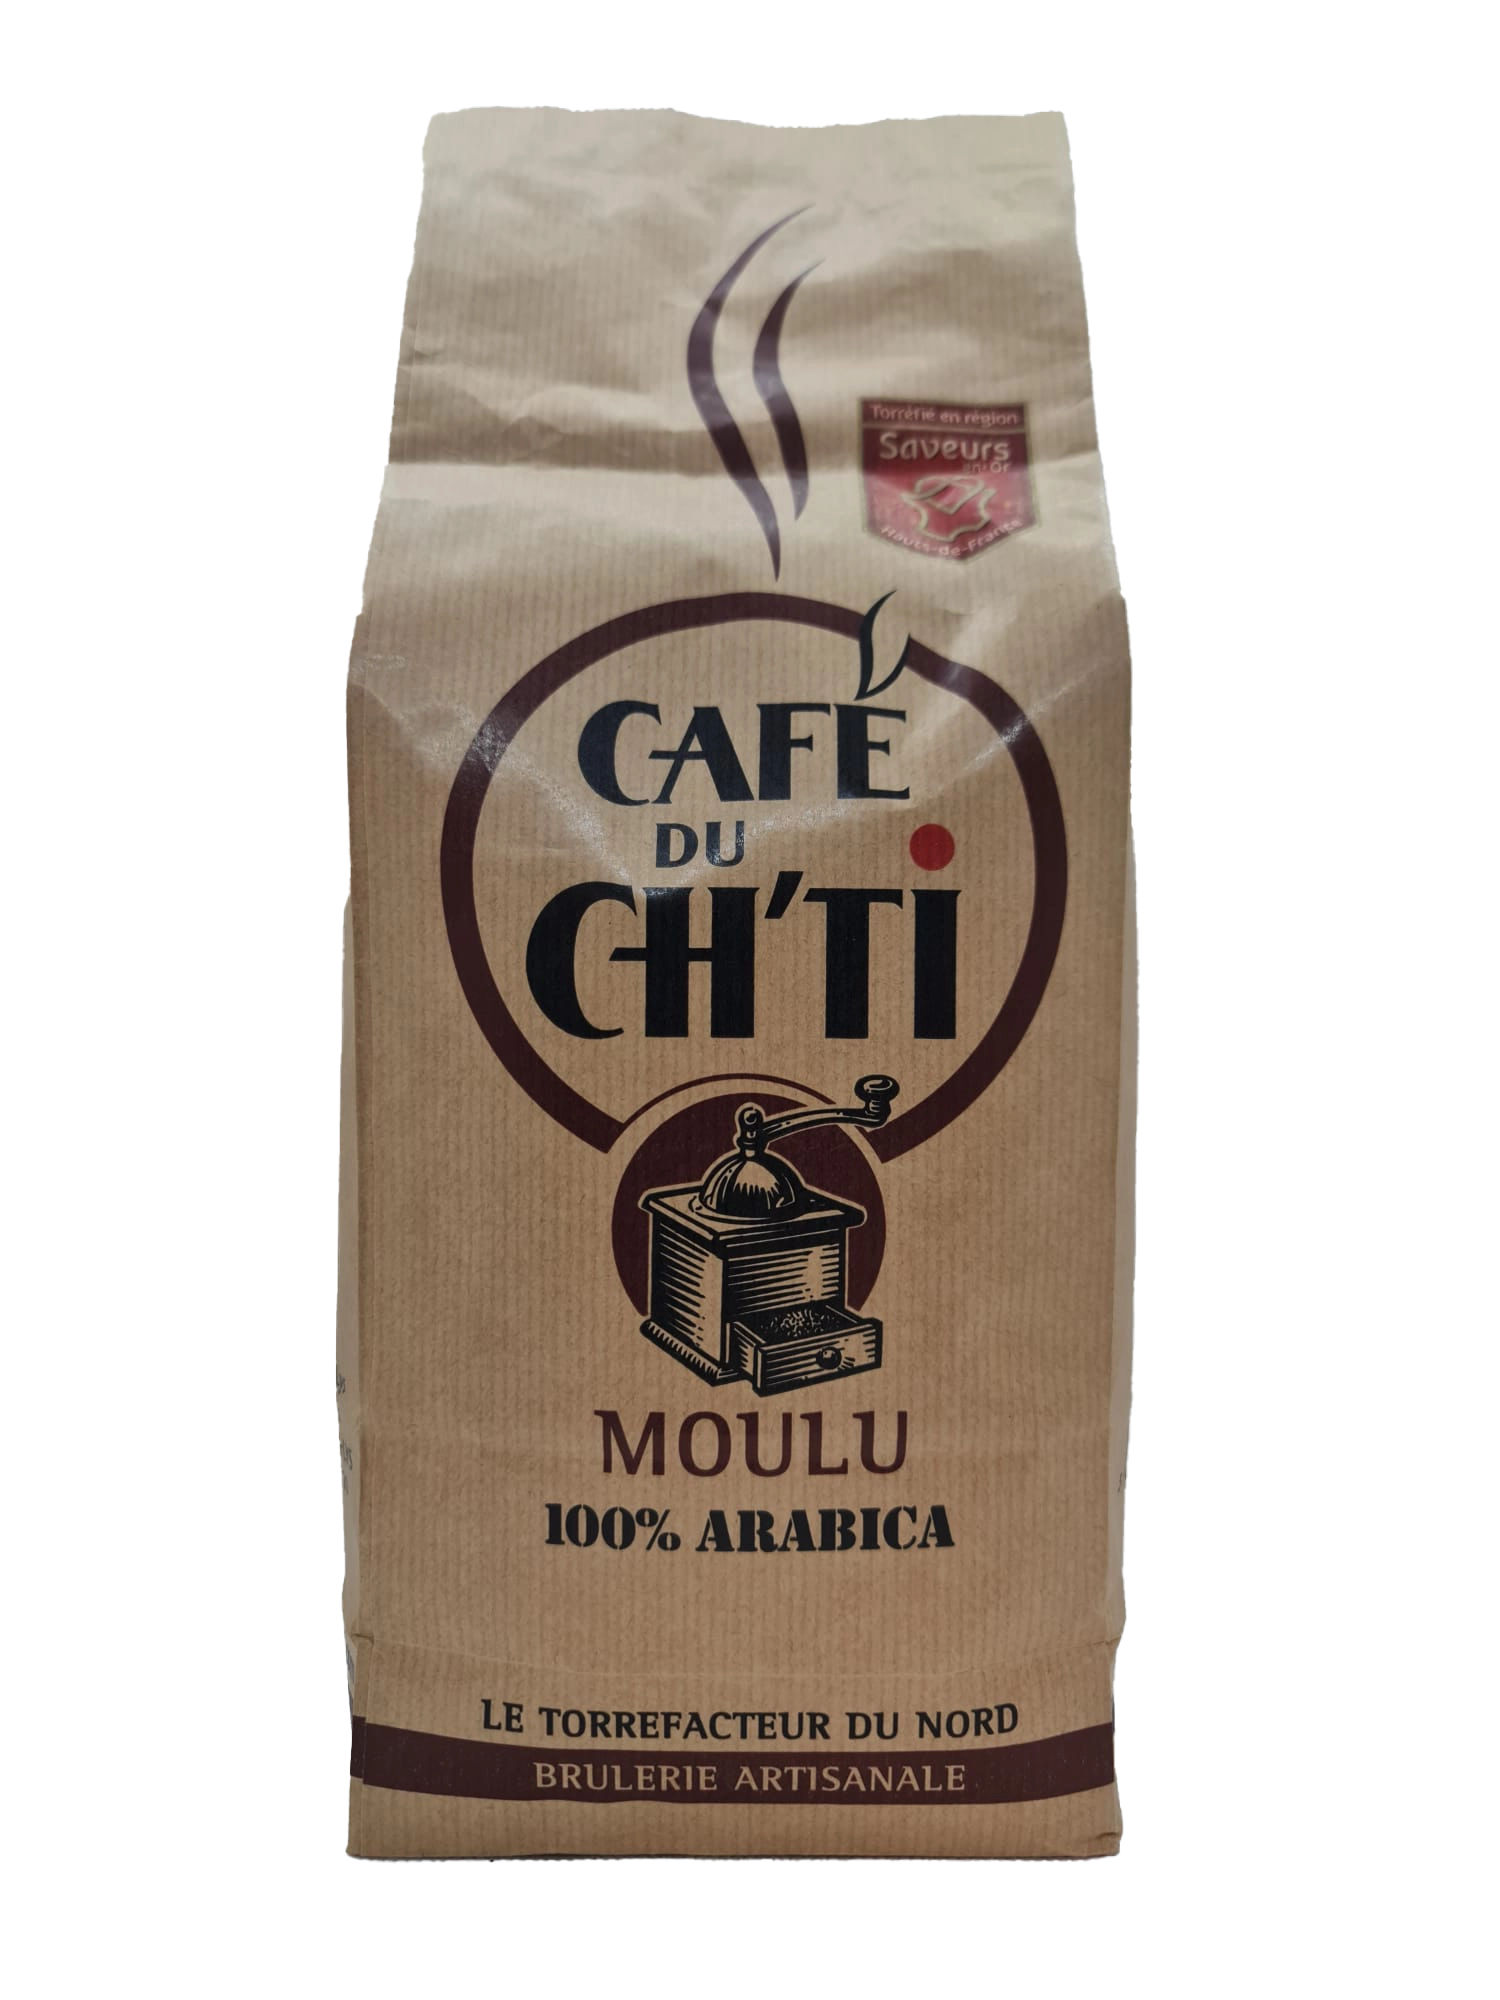 6 x 1 kilo Café du Ch'ti moulu